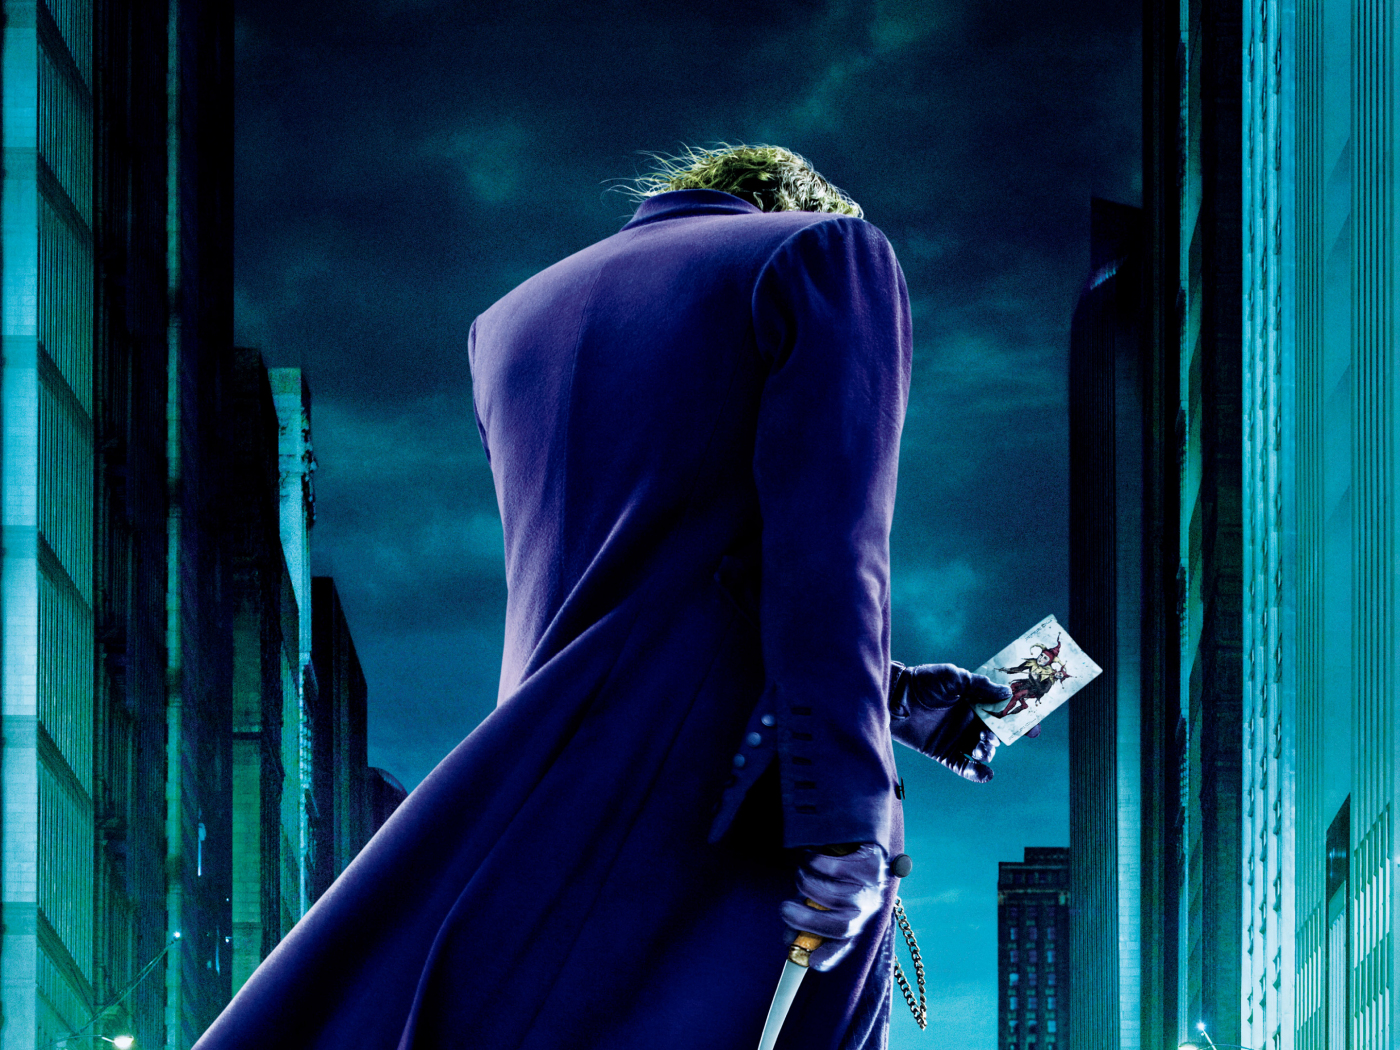 Download 1400x1050 Wallpaper Joker, The Dark Knight Movie , Standard 4:3,  Fullscreen, 1400x1050 Hd Image, Background, 5915